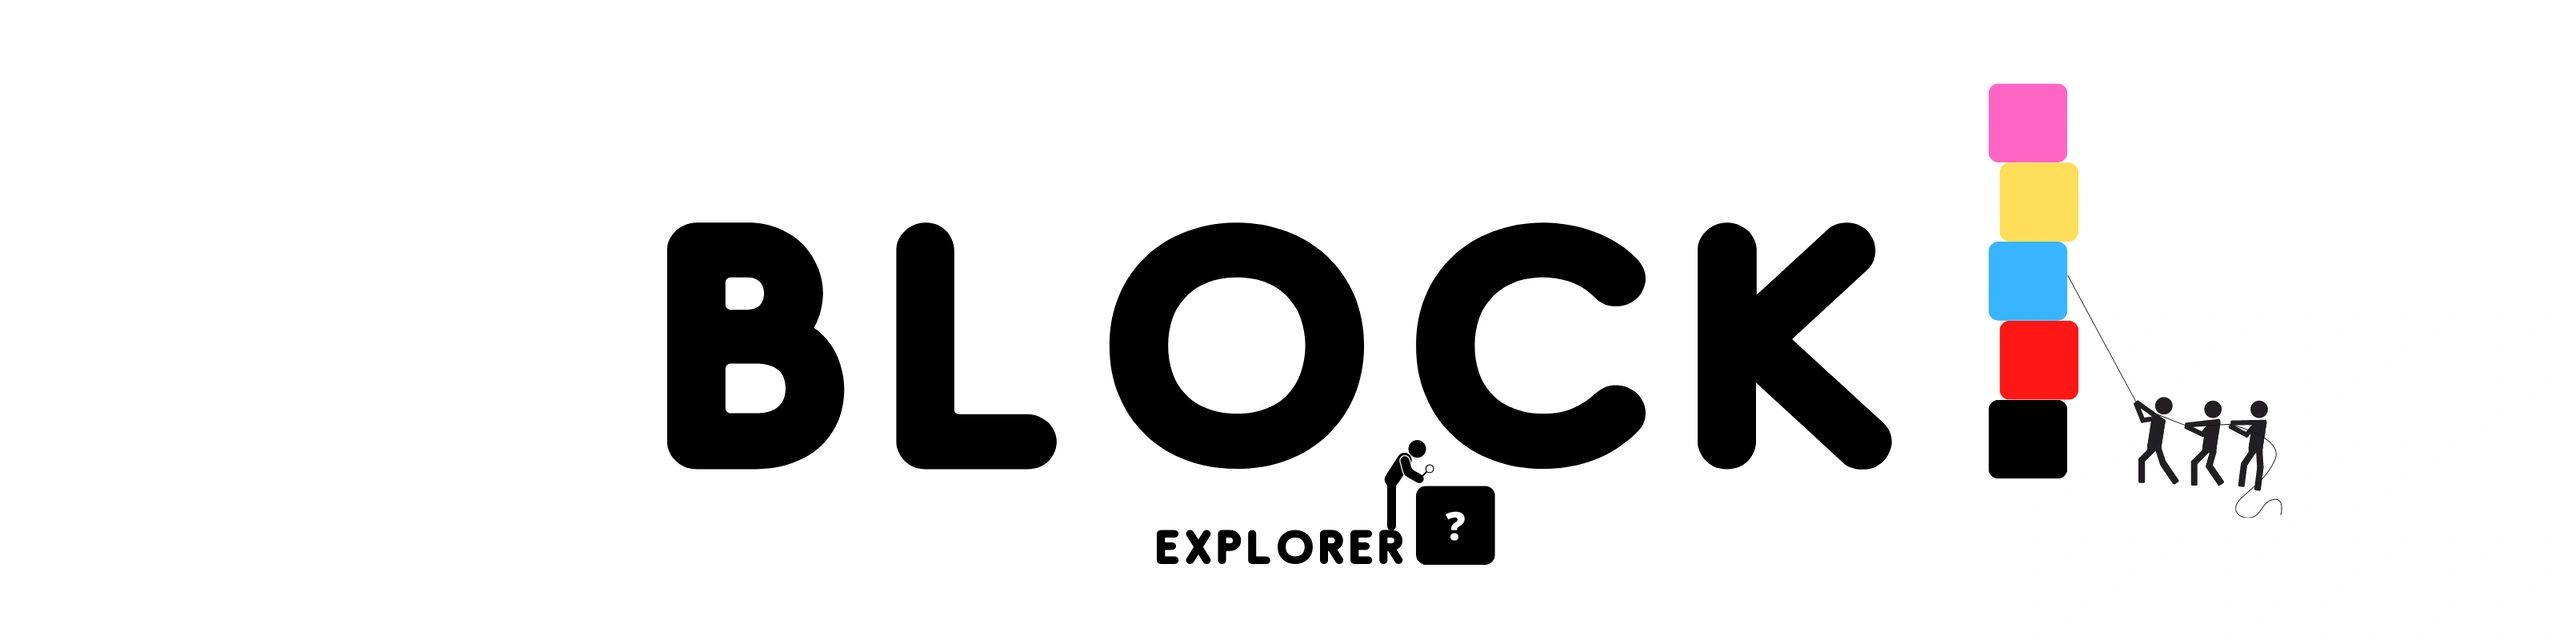 Blockcreate Explorer Logo